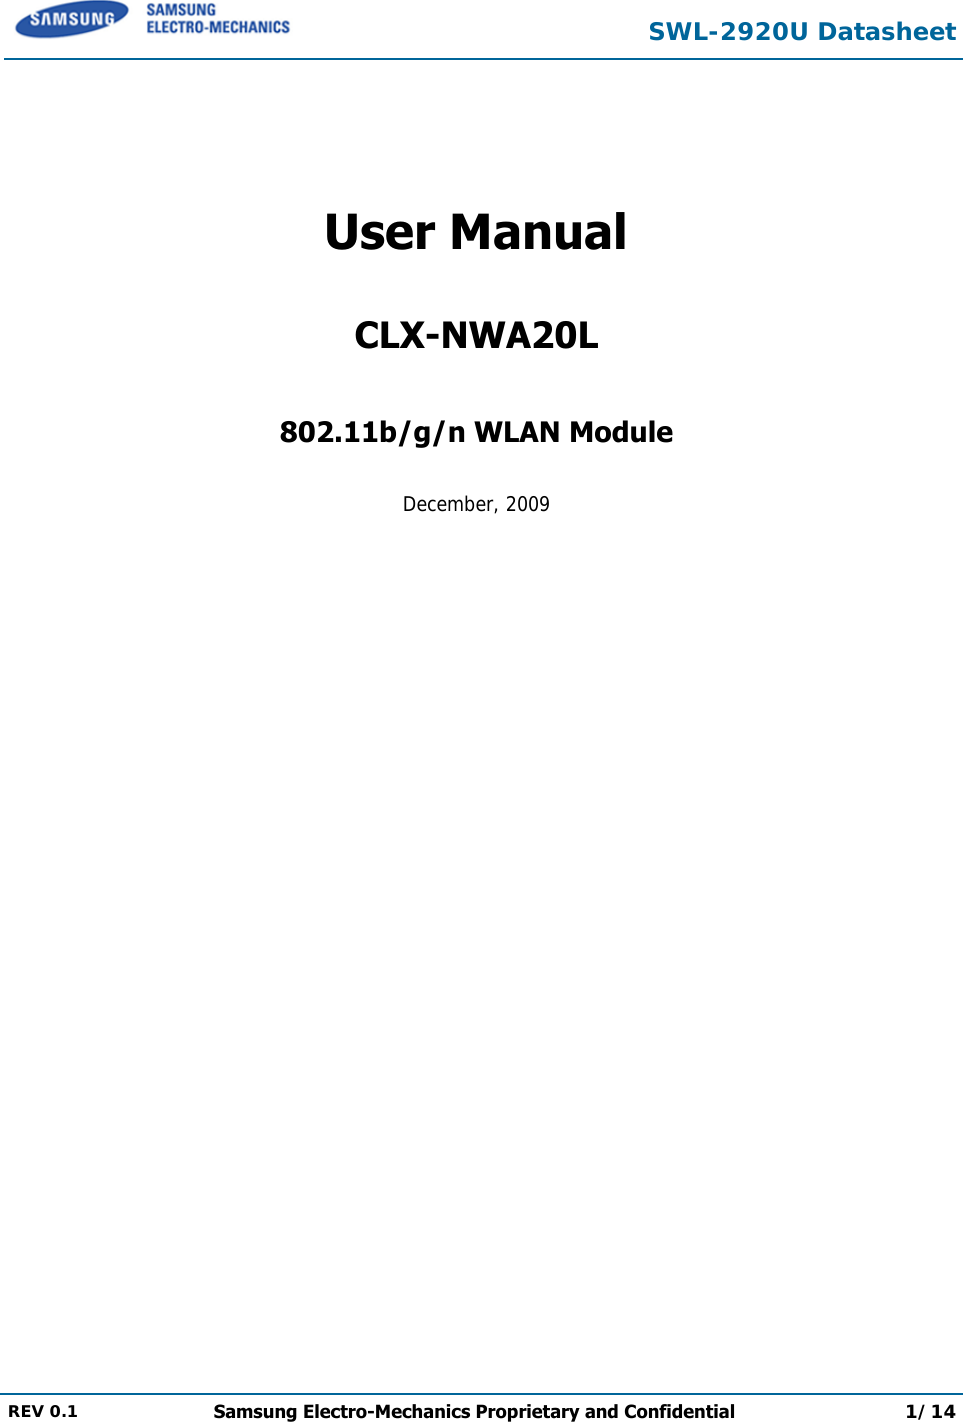  SWL-2920U Datasheet  REV 0.1  Samsung Electro-Mechanics Proprietary and Confidential 1/14    User Manual CLX-NWA20L  802.11b/g/n WLAN Module  December, 2009         